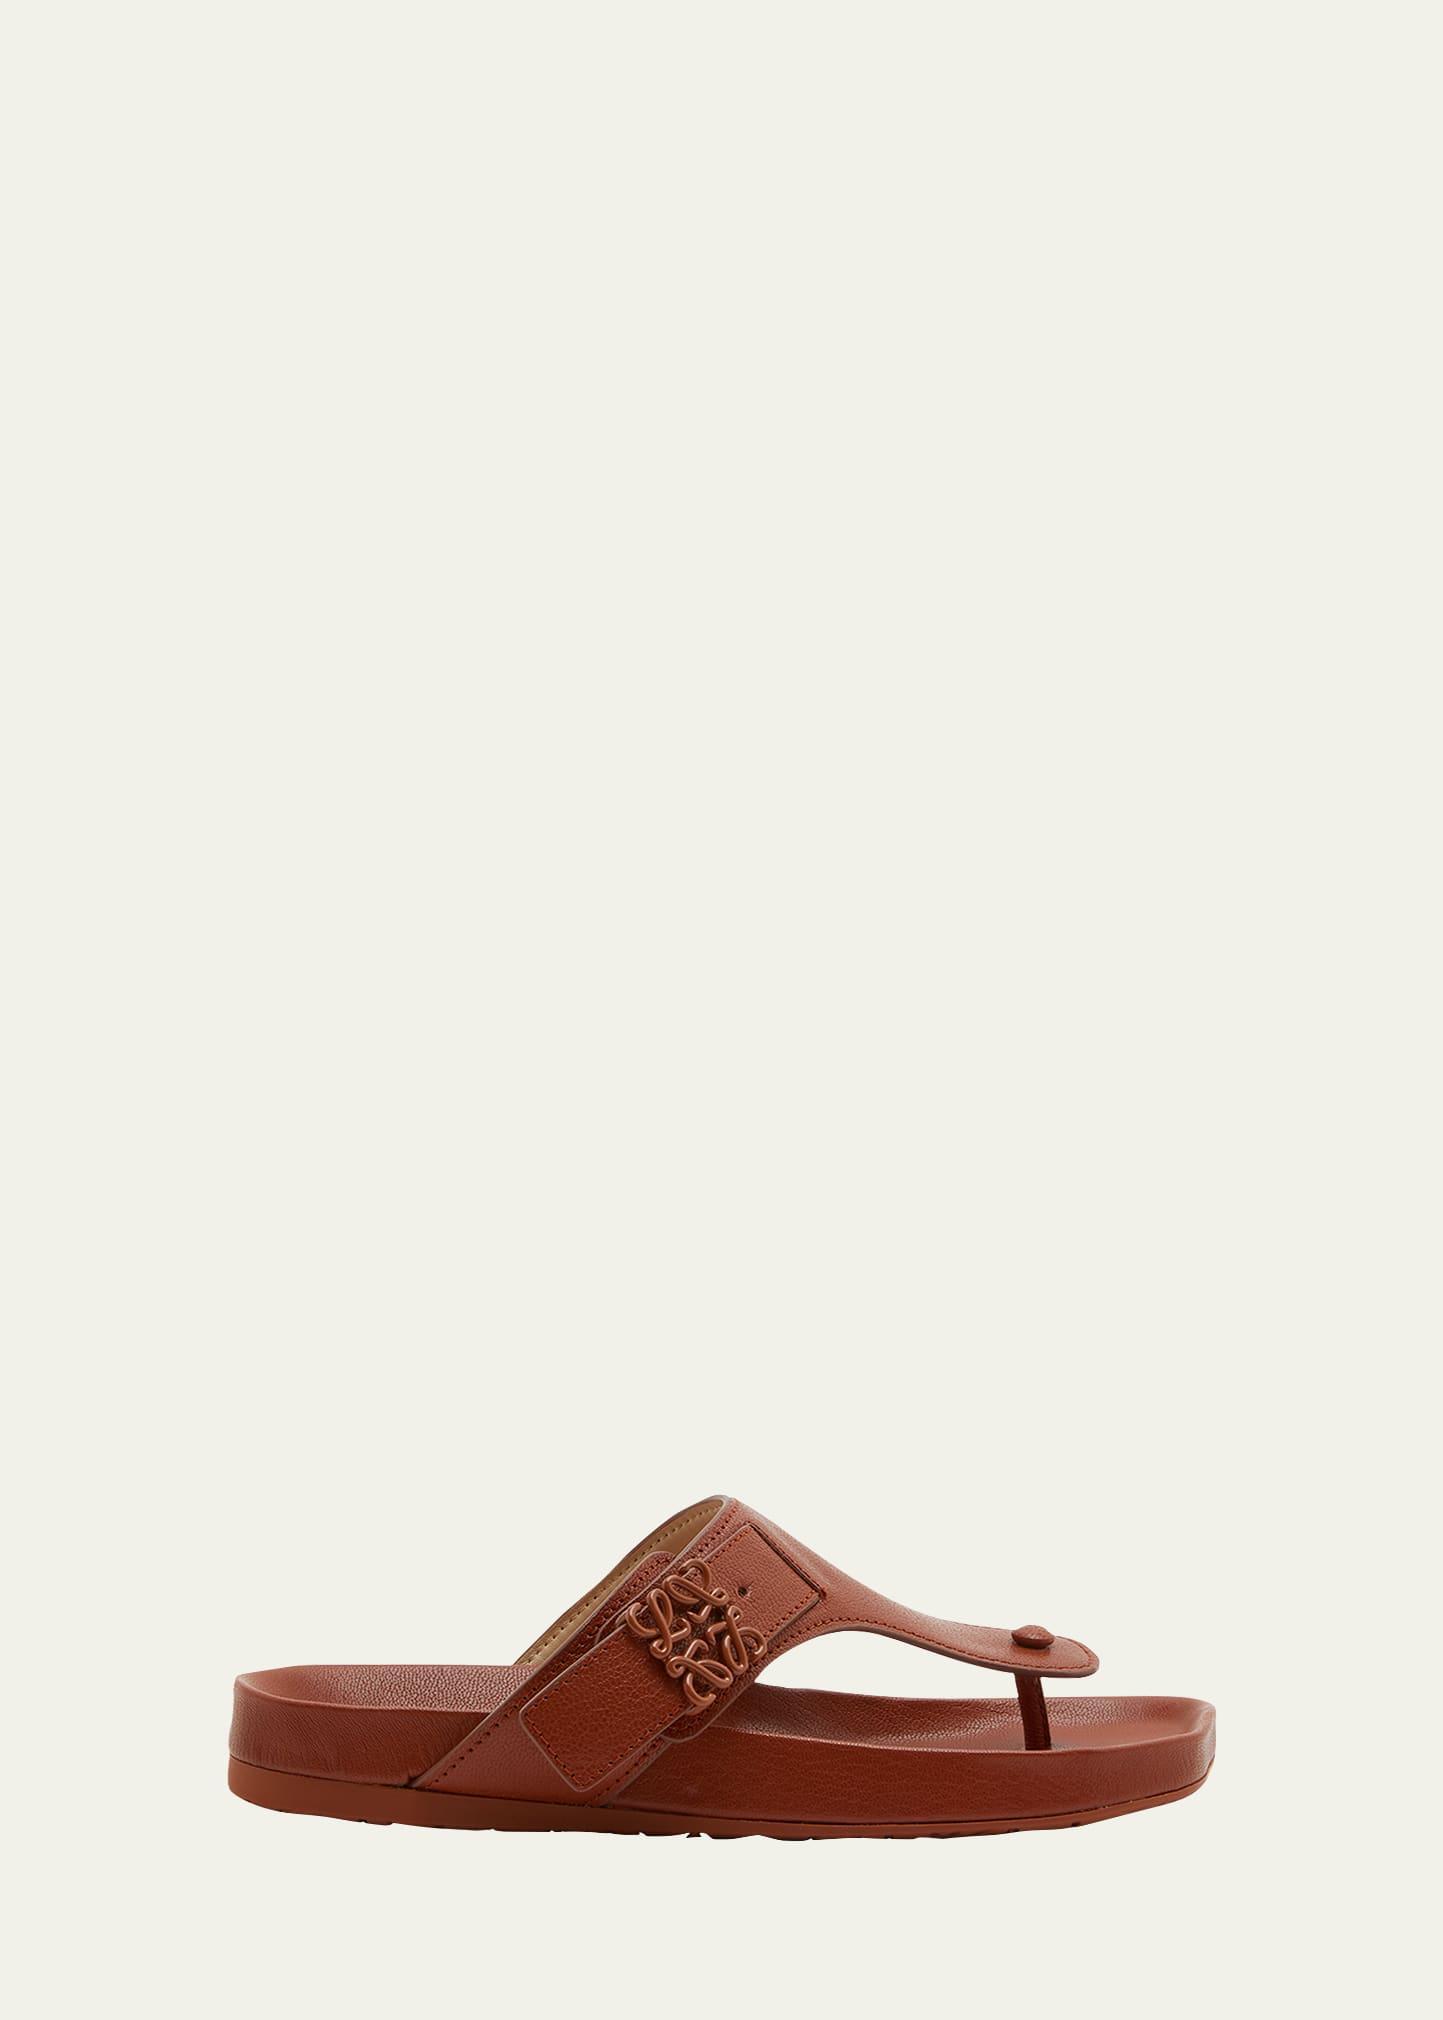 Loewe Leather Comfort Sandal Product Image